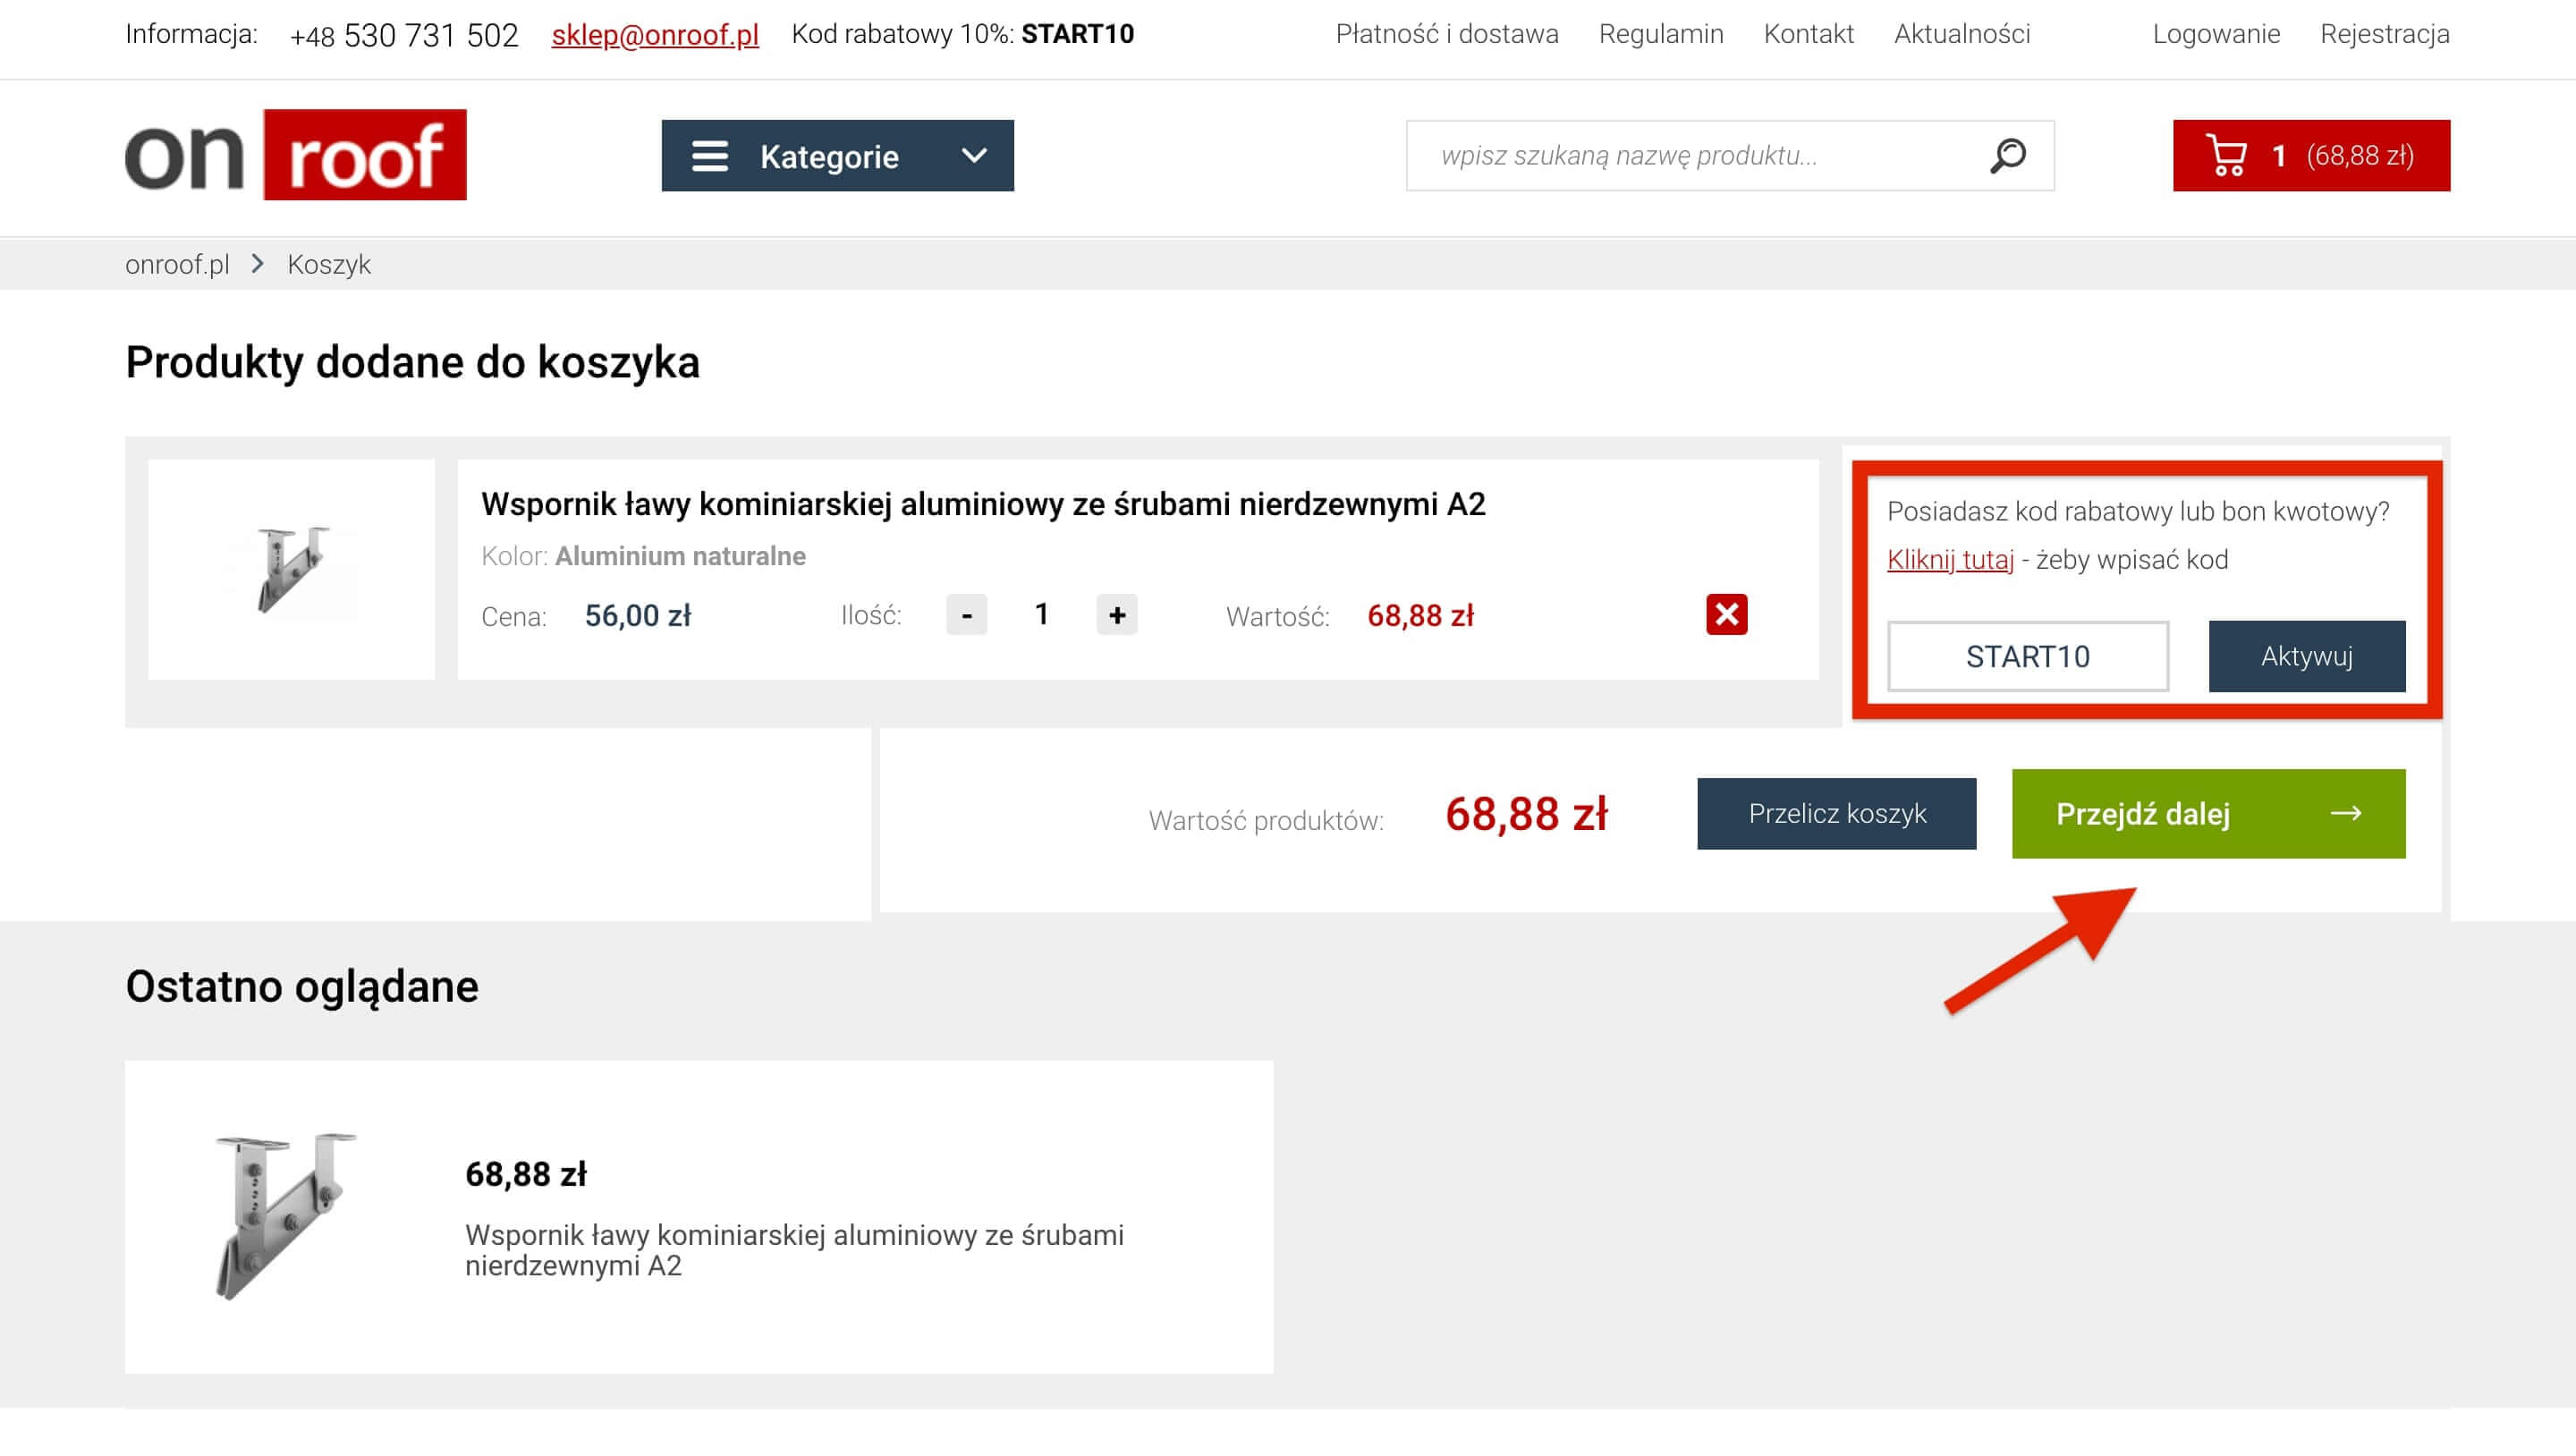 Jak kupować - instrukcja obsługi sklepu onroof.pl - screen 5